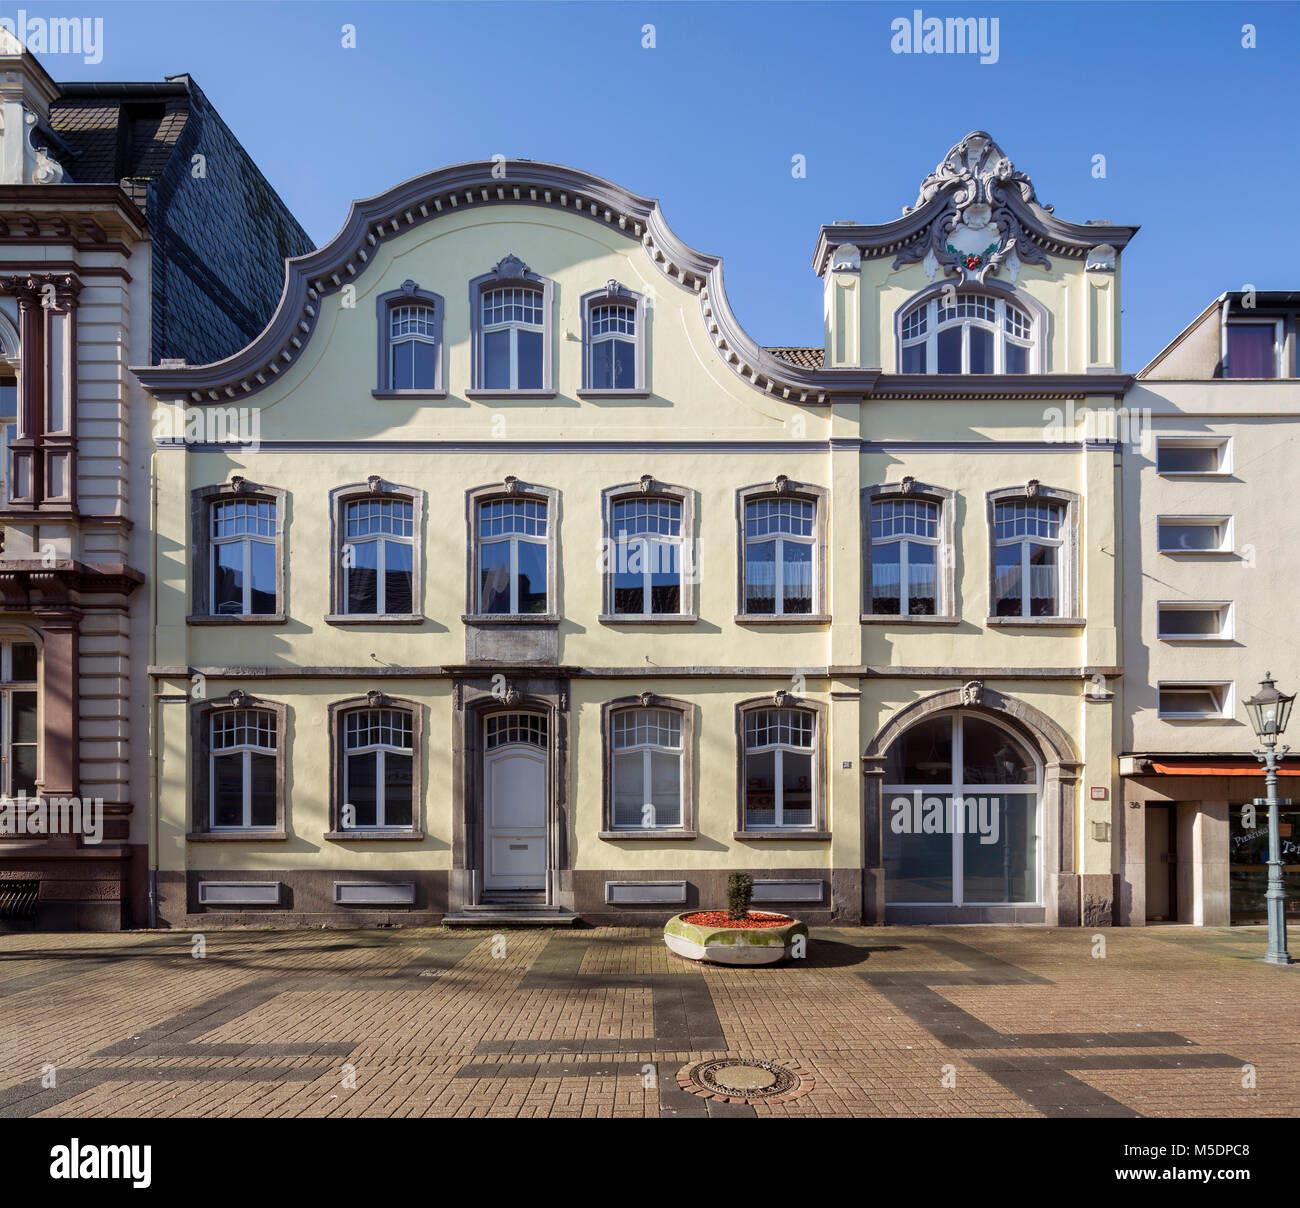 Krefeld-Uerdingen, Wiegelsches Haus, 1754 erbaut Stockfotografie - Alamy